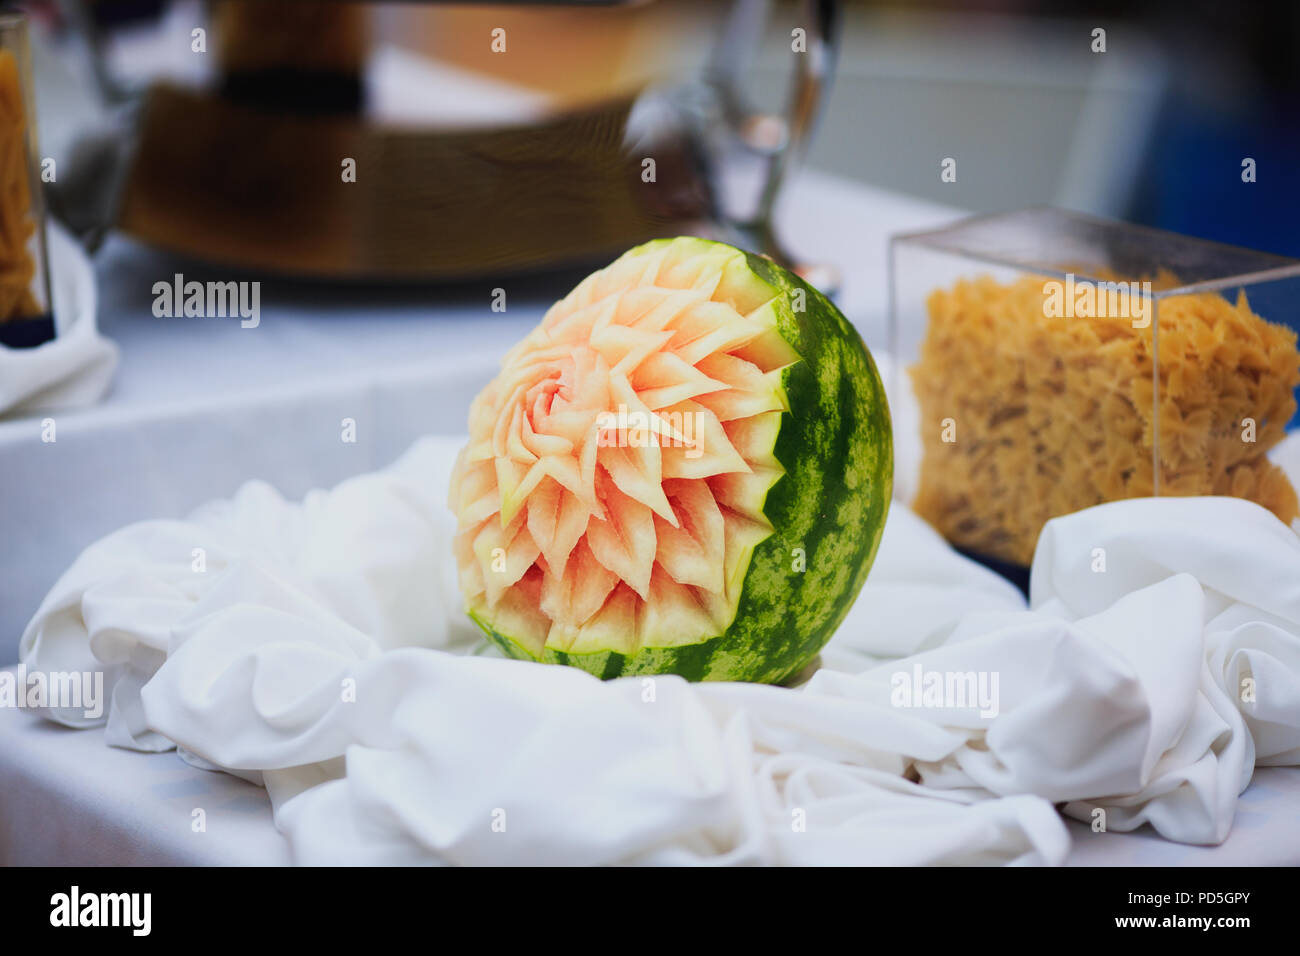 Watermelon carving, cute fruit figures, trendy food design Stock Photo